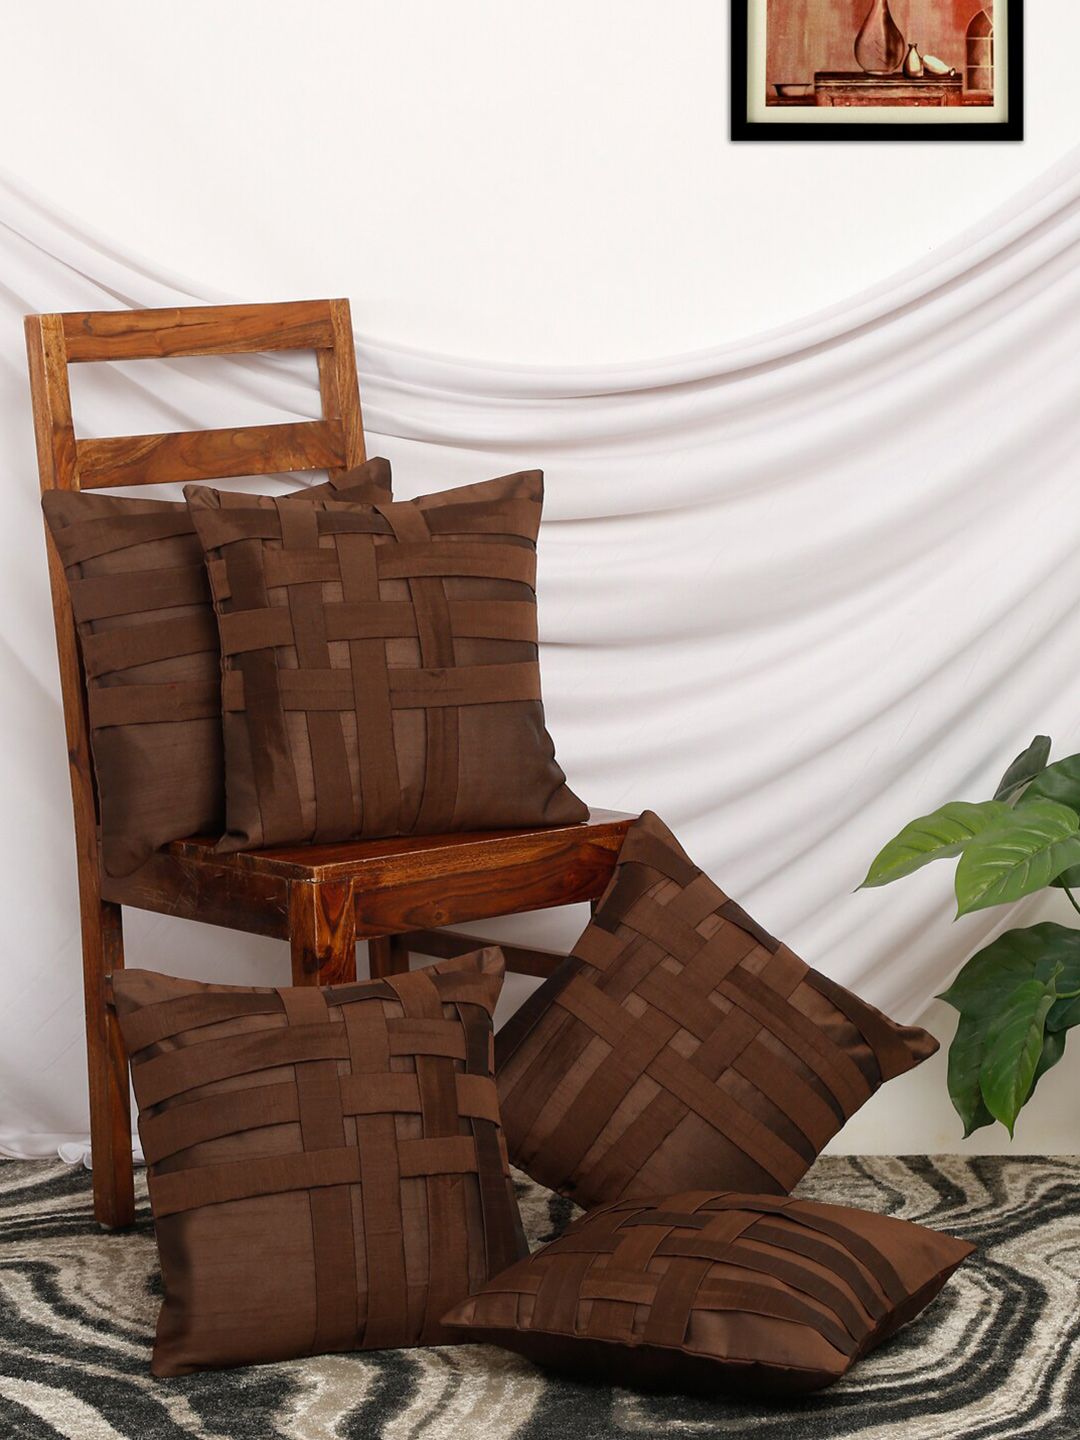 Slushy Mushy Set of 5 Geometric Square Cushion Covers Price in India